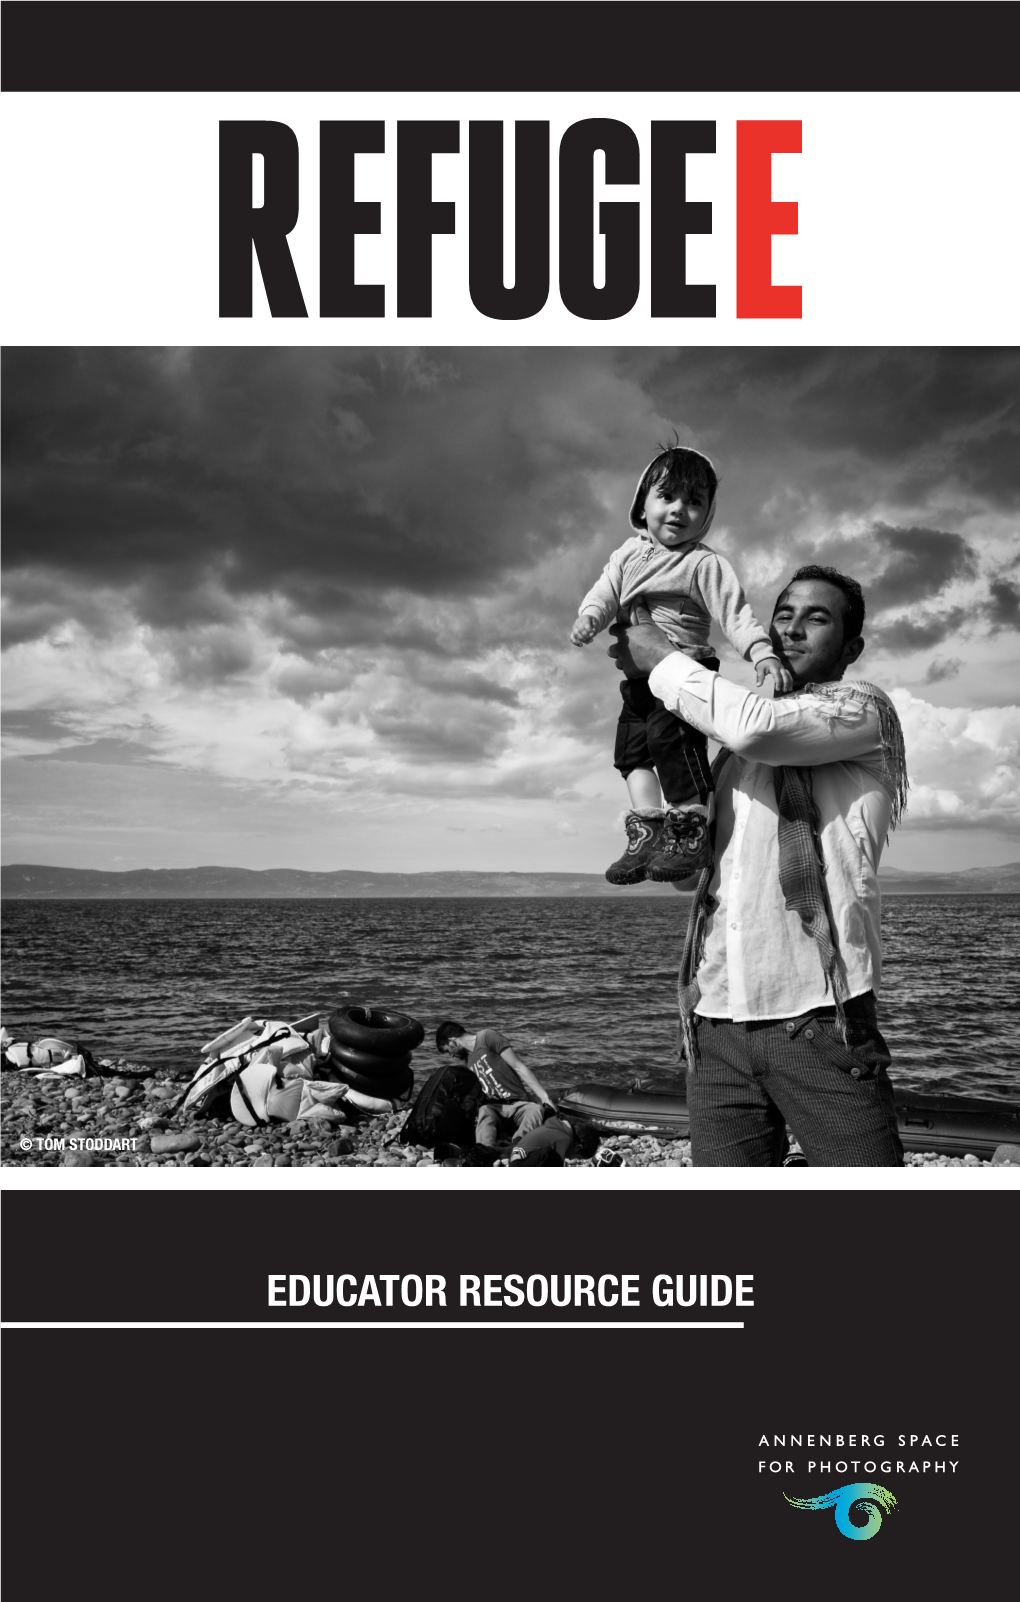 Education Resource